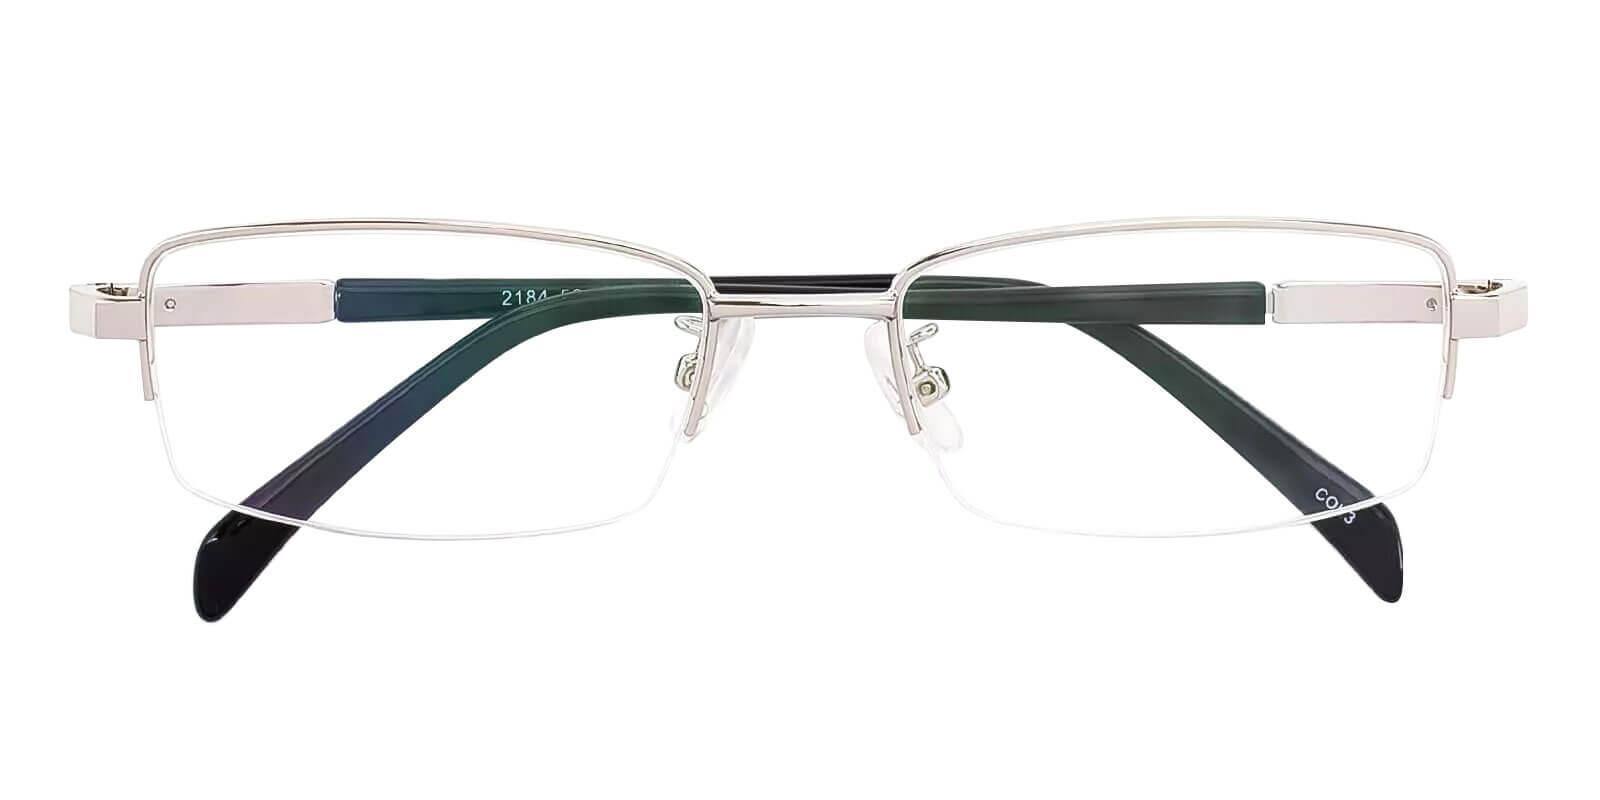 Michael Silver Metal Eyeglasses , NosePads , SpringHinges Frames from ABBE Glasses